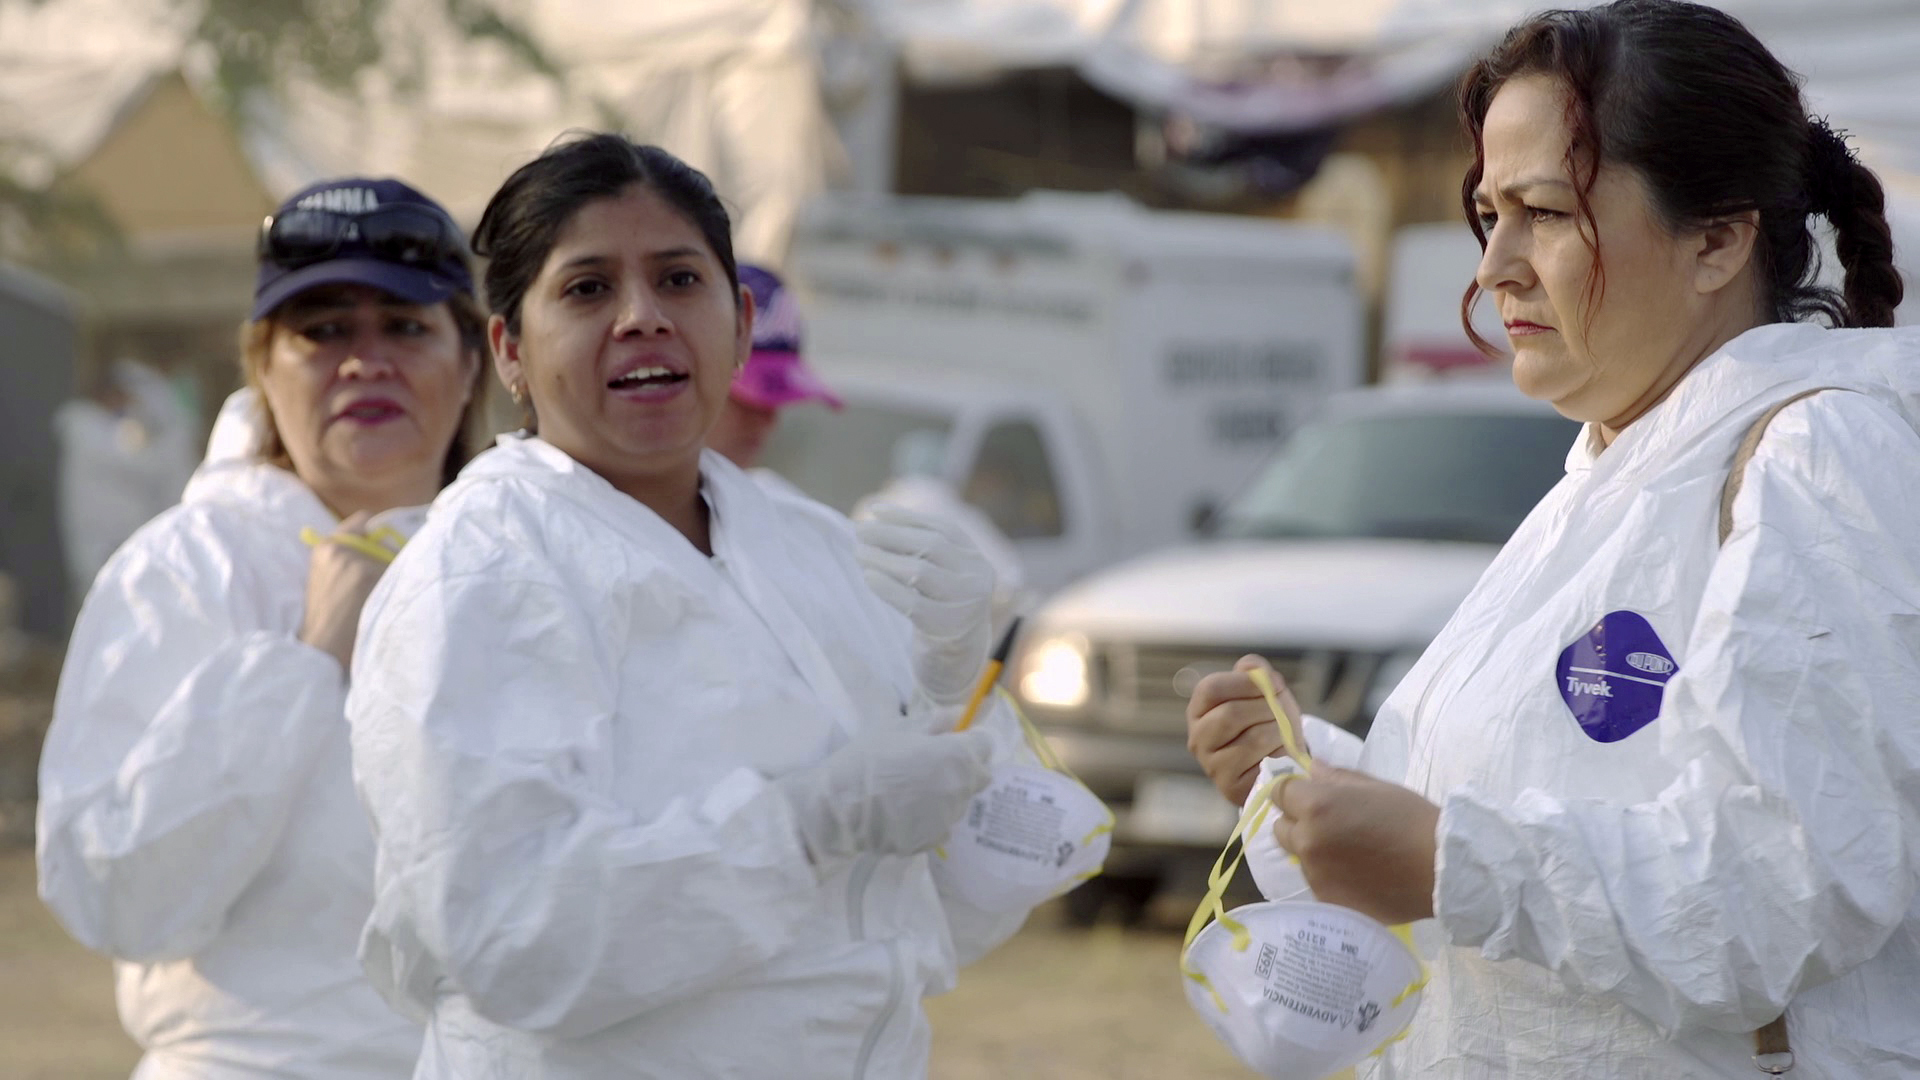 Documental mexicano “Volverte a ver” retrata lucha de madres buscadoras